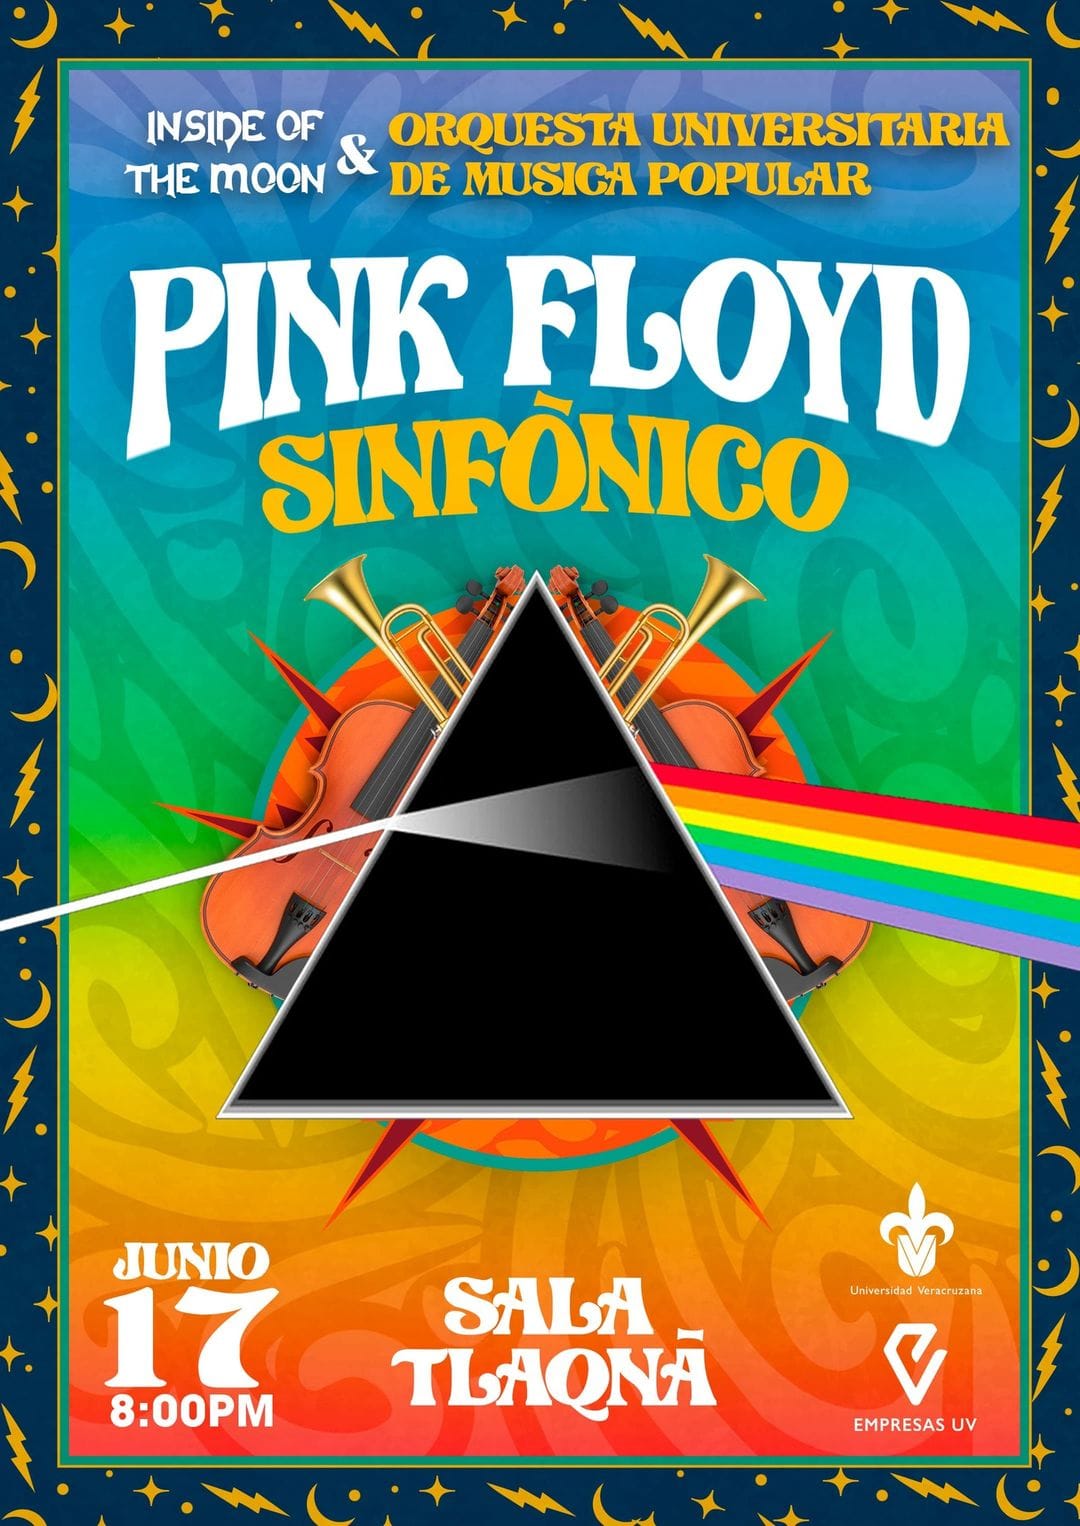 “Pink Floyd sinfónico” en sala Tlaqná